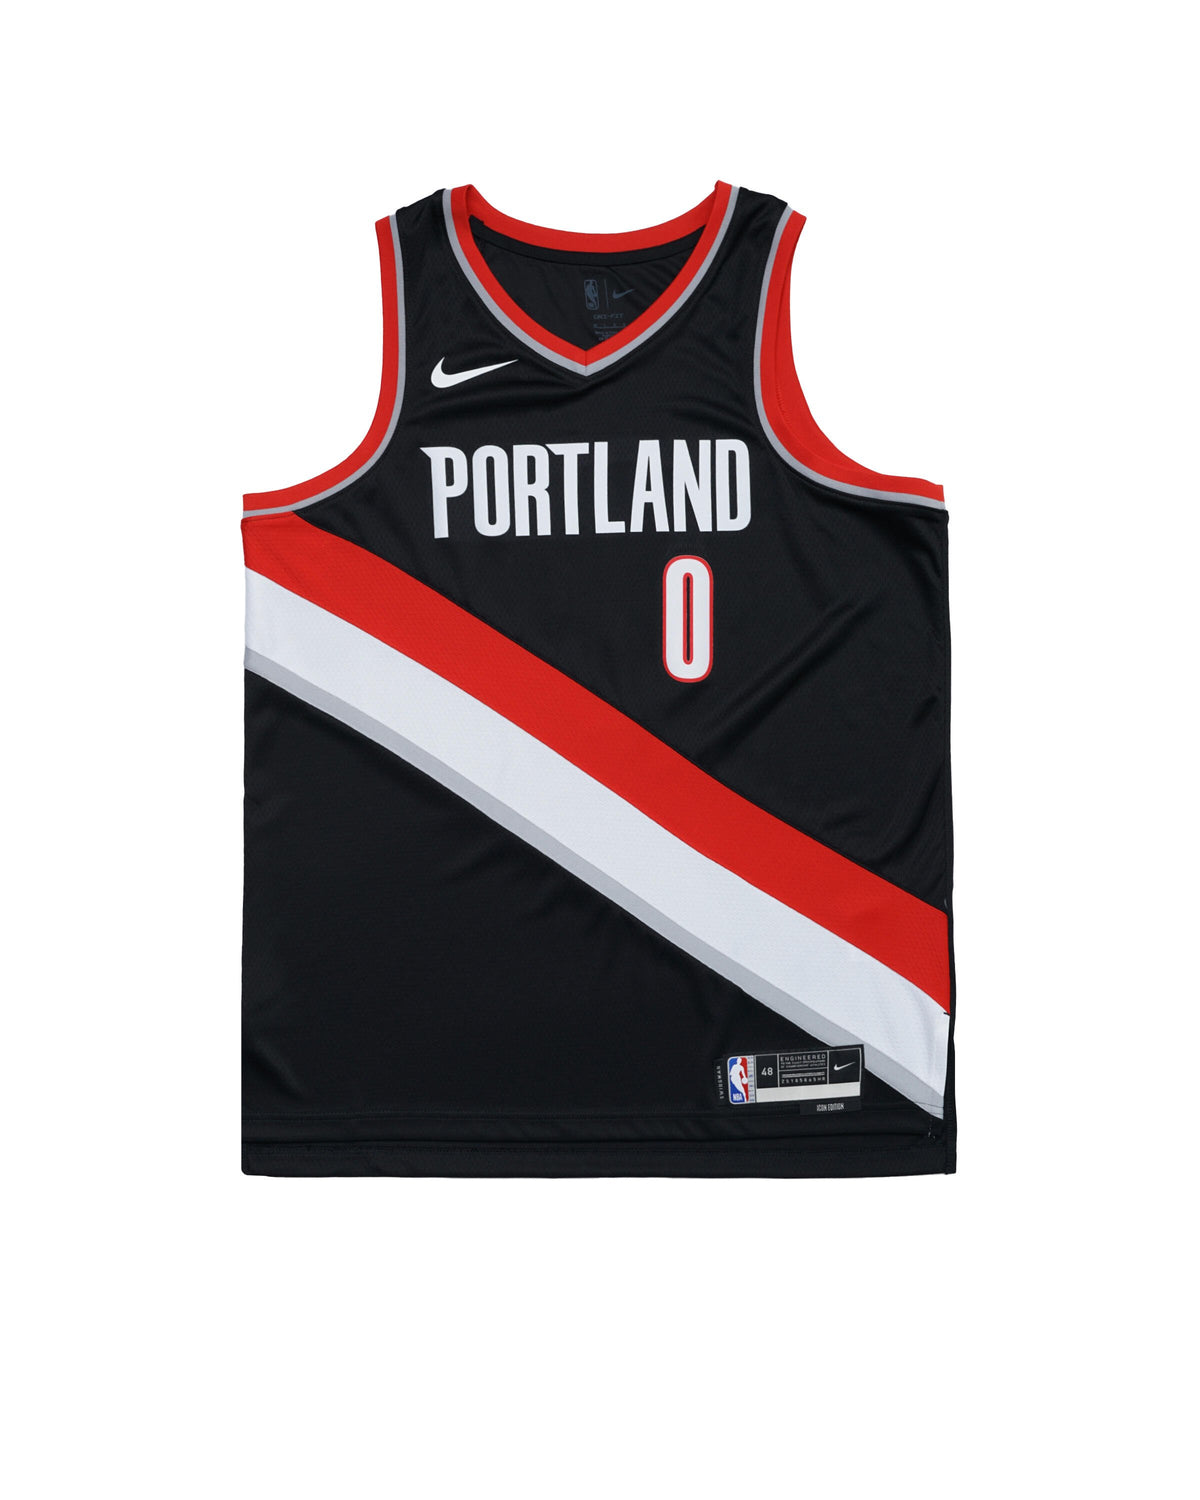 Nike SWINGMAN JERSEY - Portland Trail Blazers 'Damian Lillard'